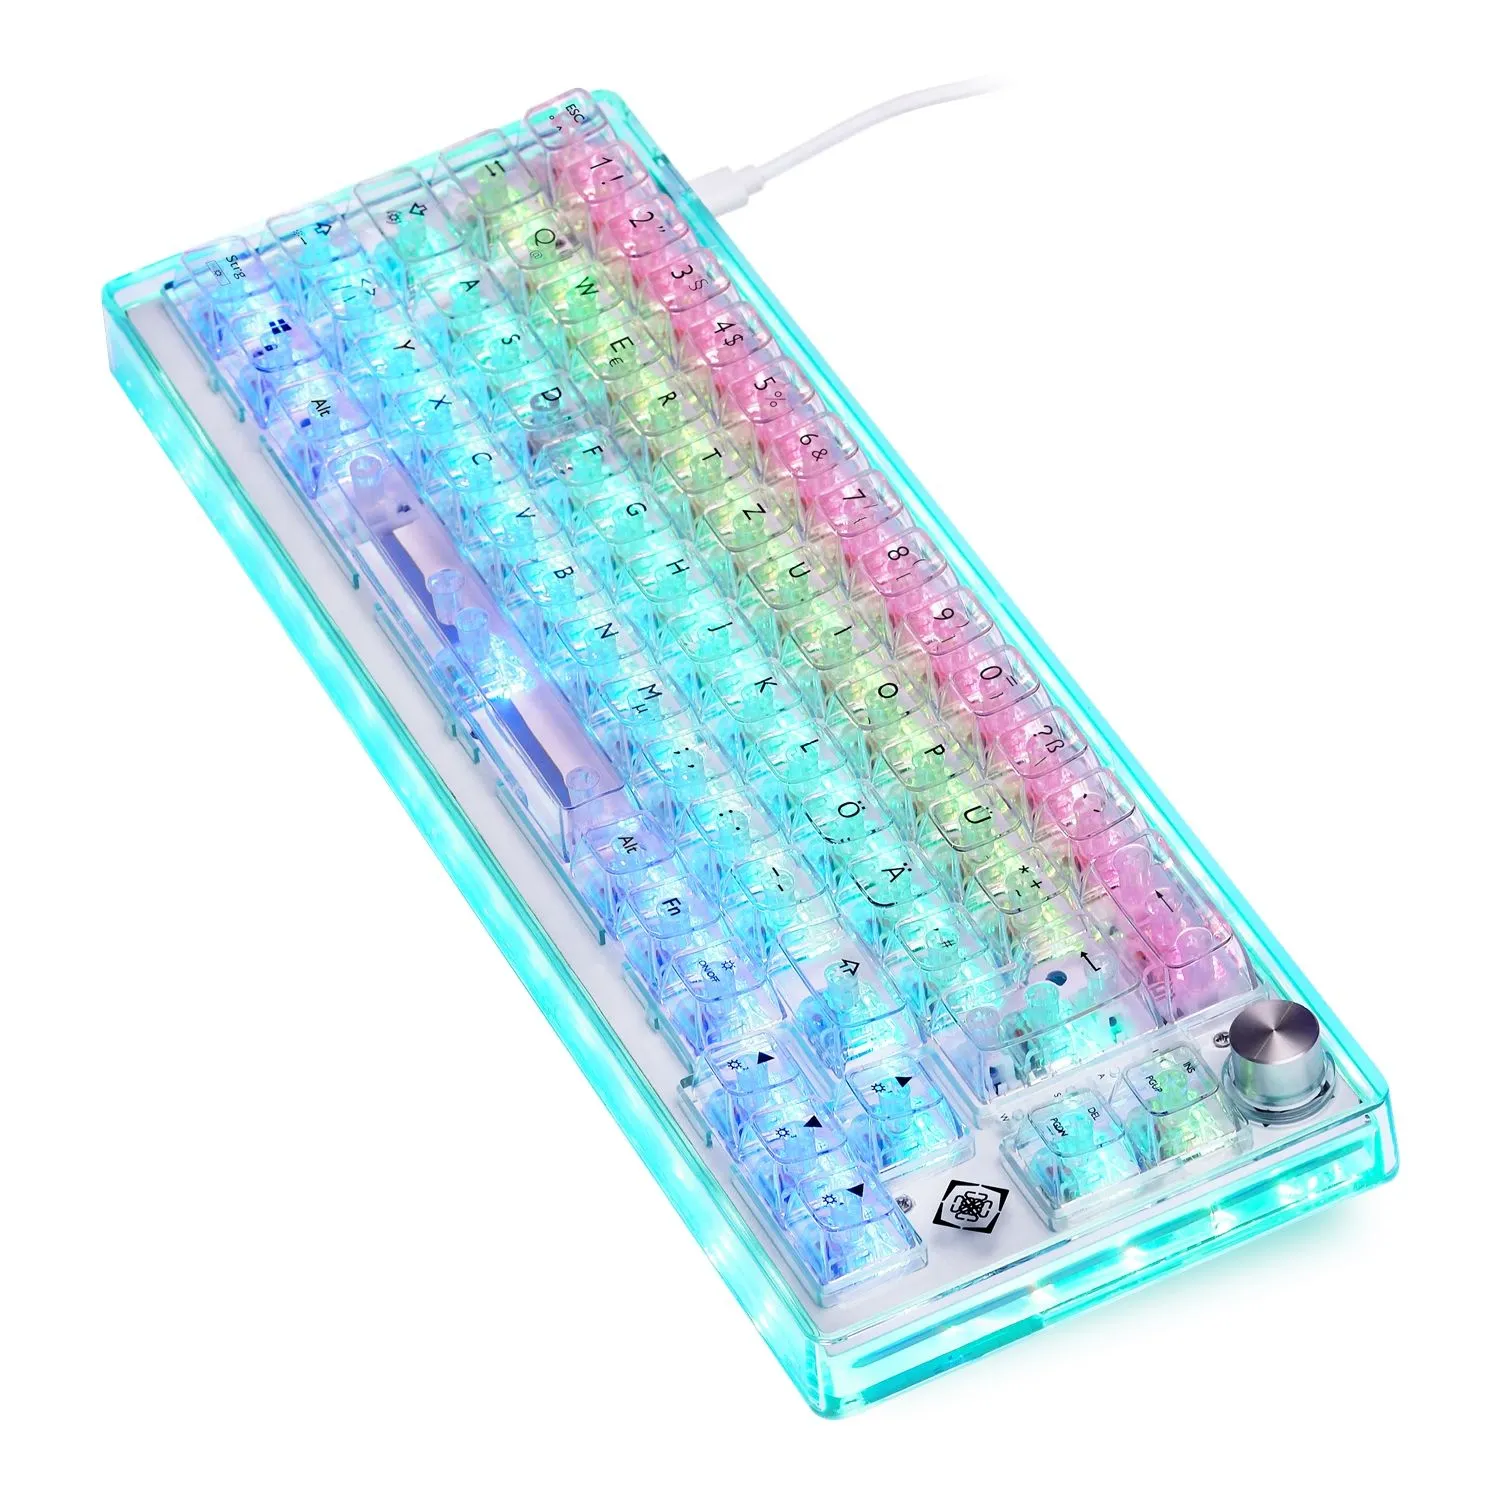 GAMING Tastatur RGB, DK459